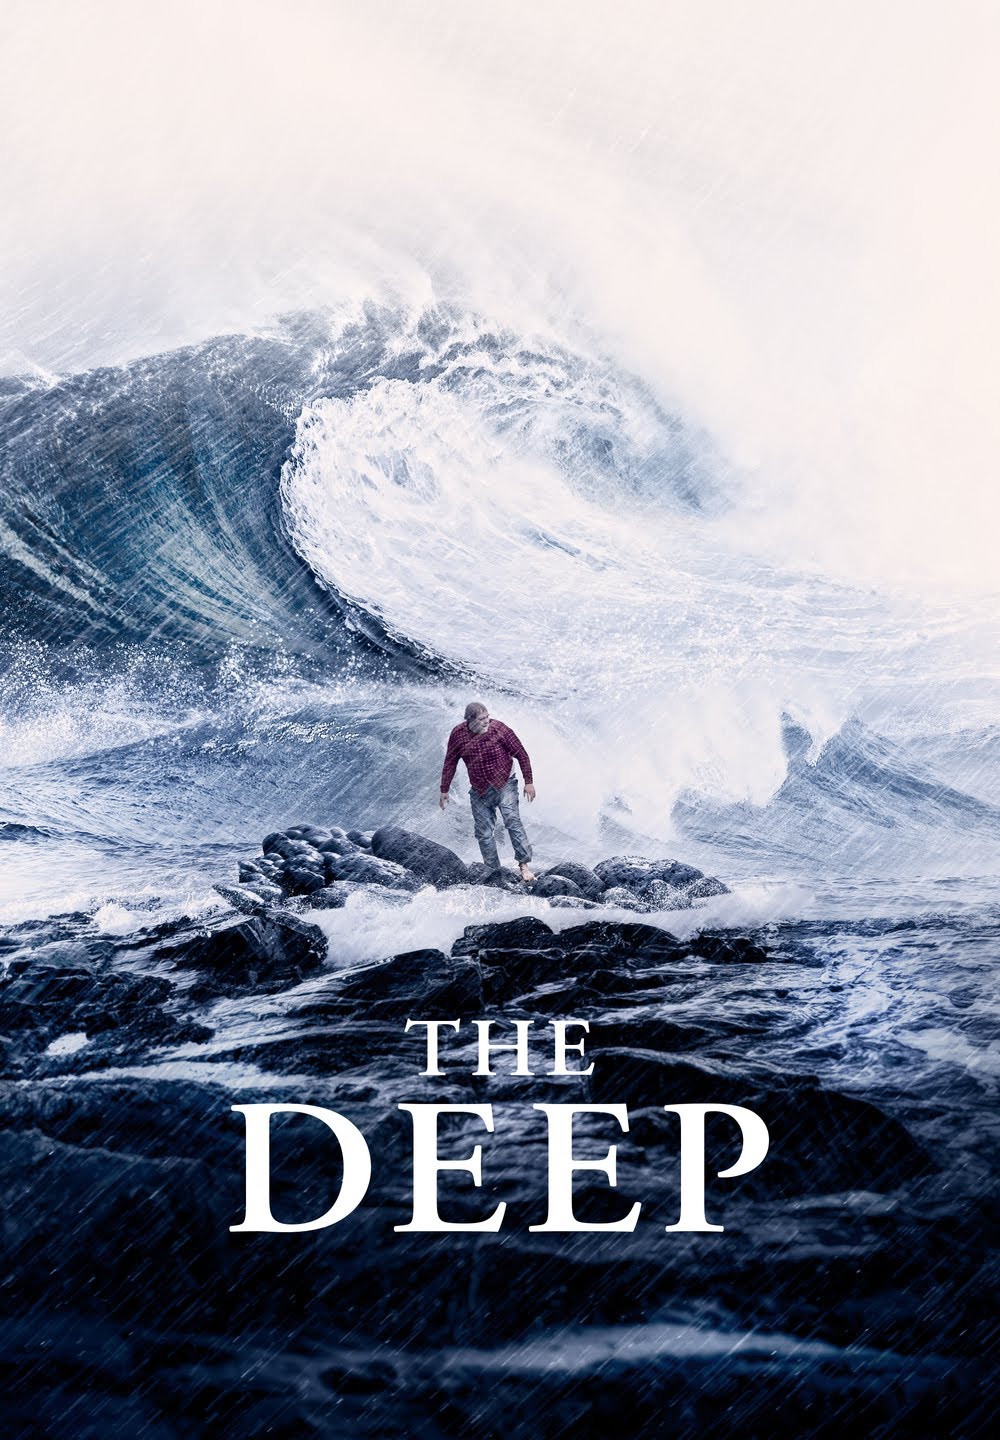 The Deep [HD] (2012)